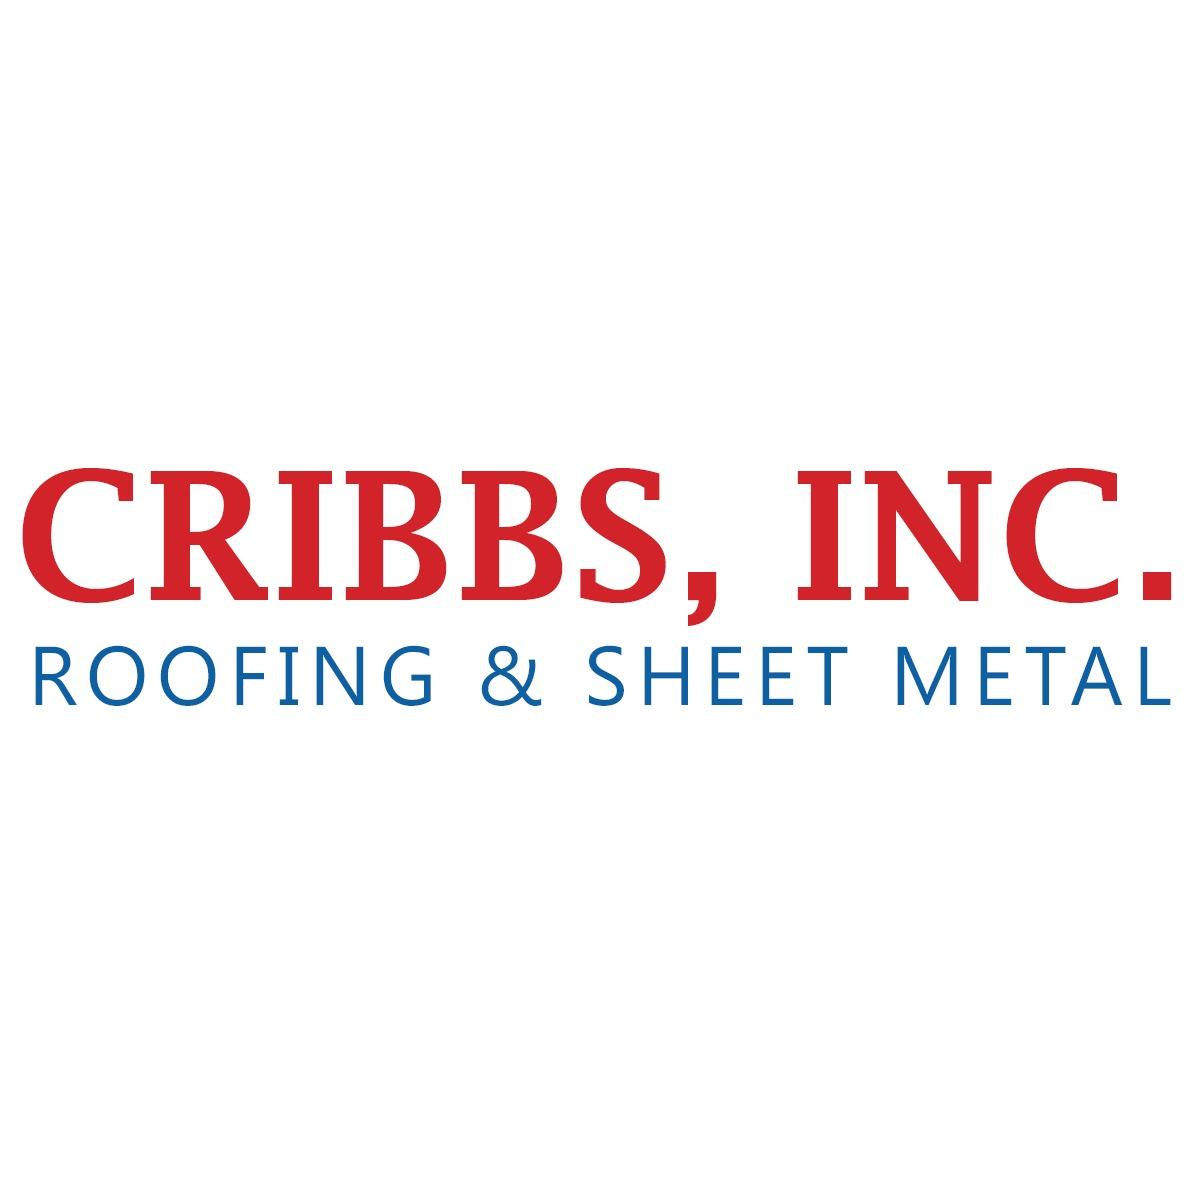 Cribbs Roofing, Inc